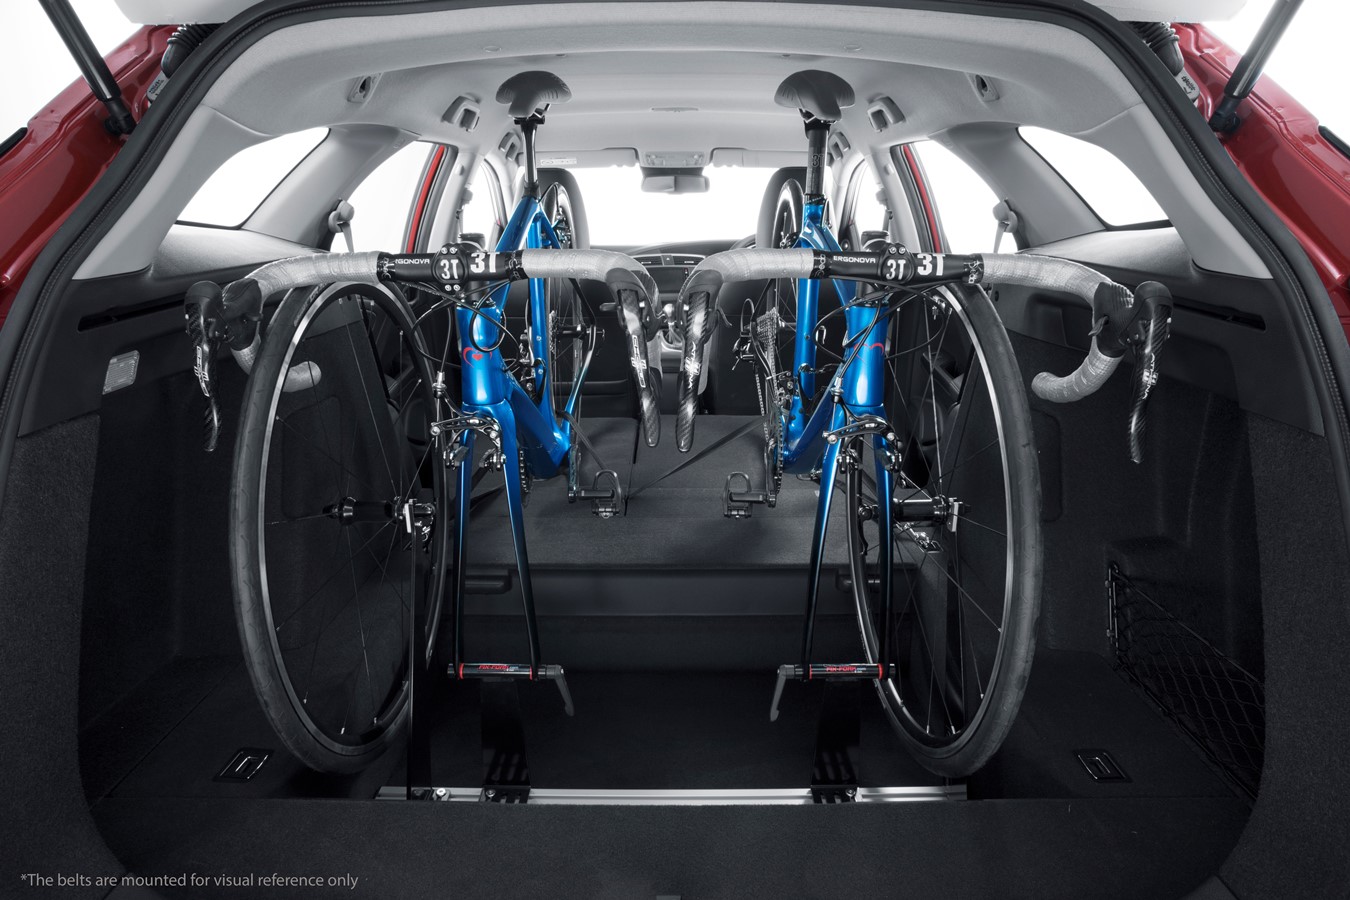 Choose Honda if you love your bike! Honda launches incar bicycle rack for Civic Tourer